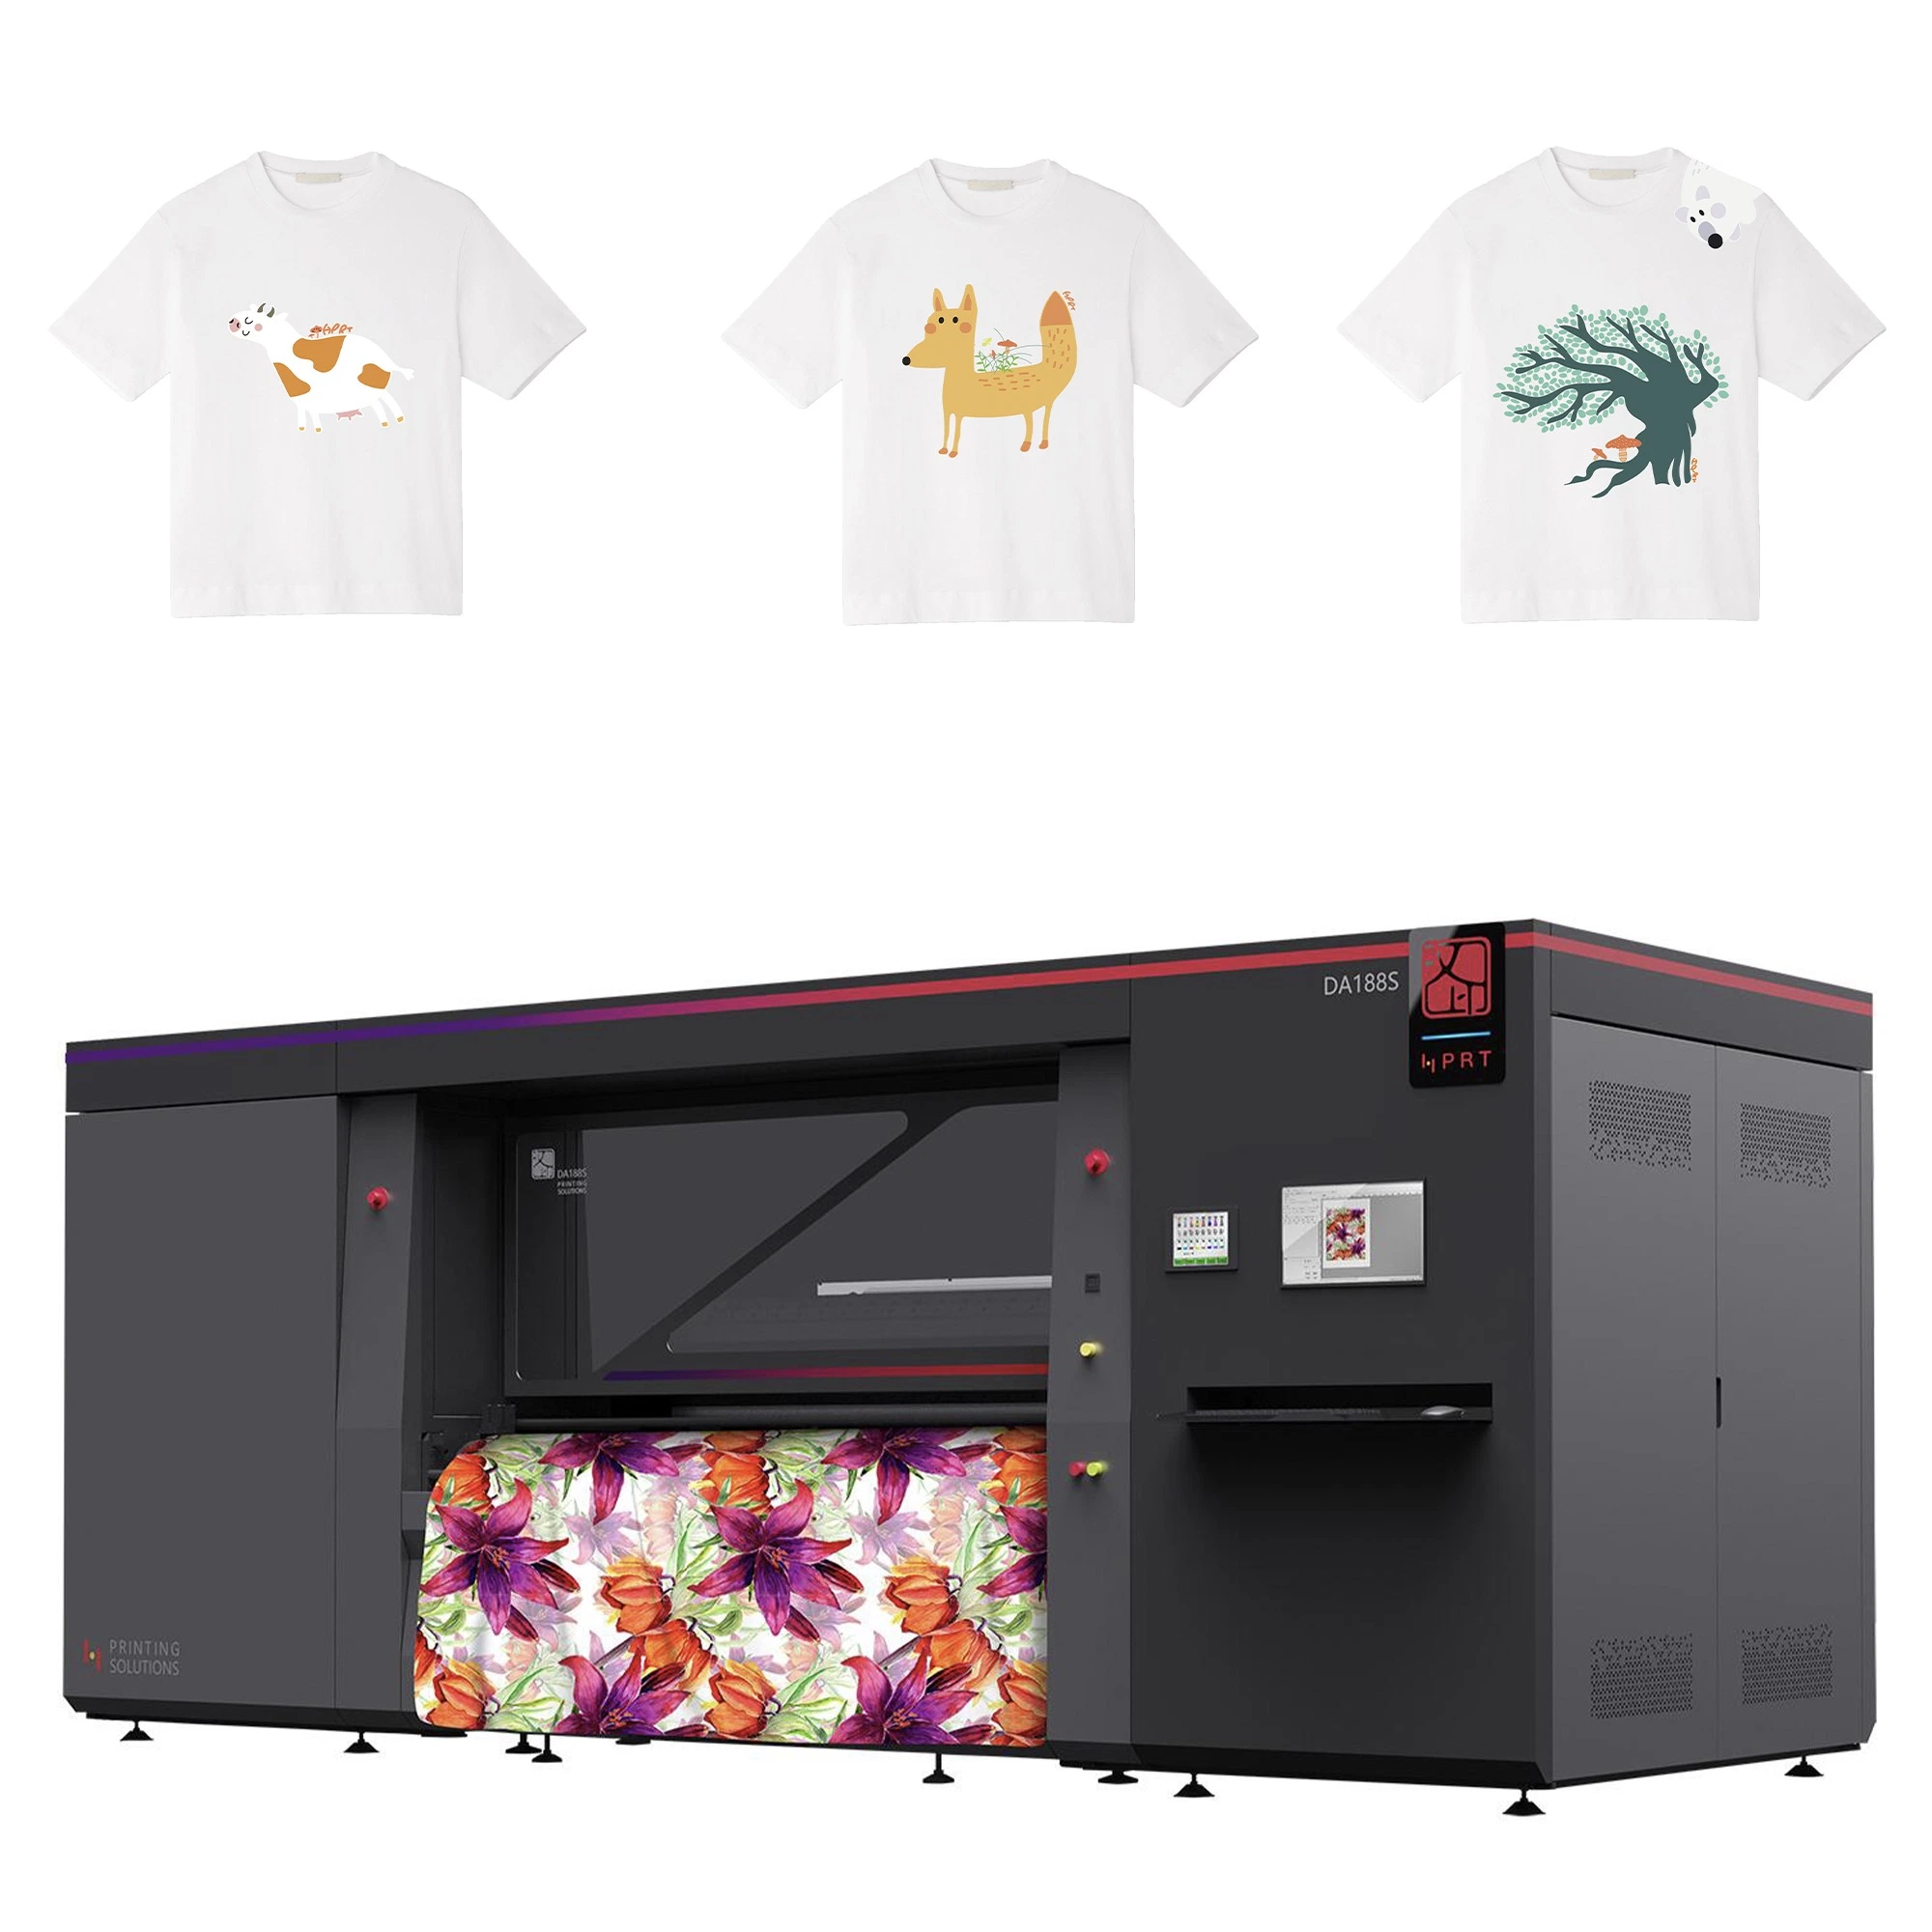 Kyocera Druckkopf/16 32 Farben/HPRT Industrial Roll to Roll Digital Inkjet-Drucker Textilbekleidung Tshirt Druckmaschine